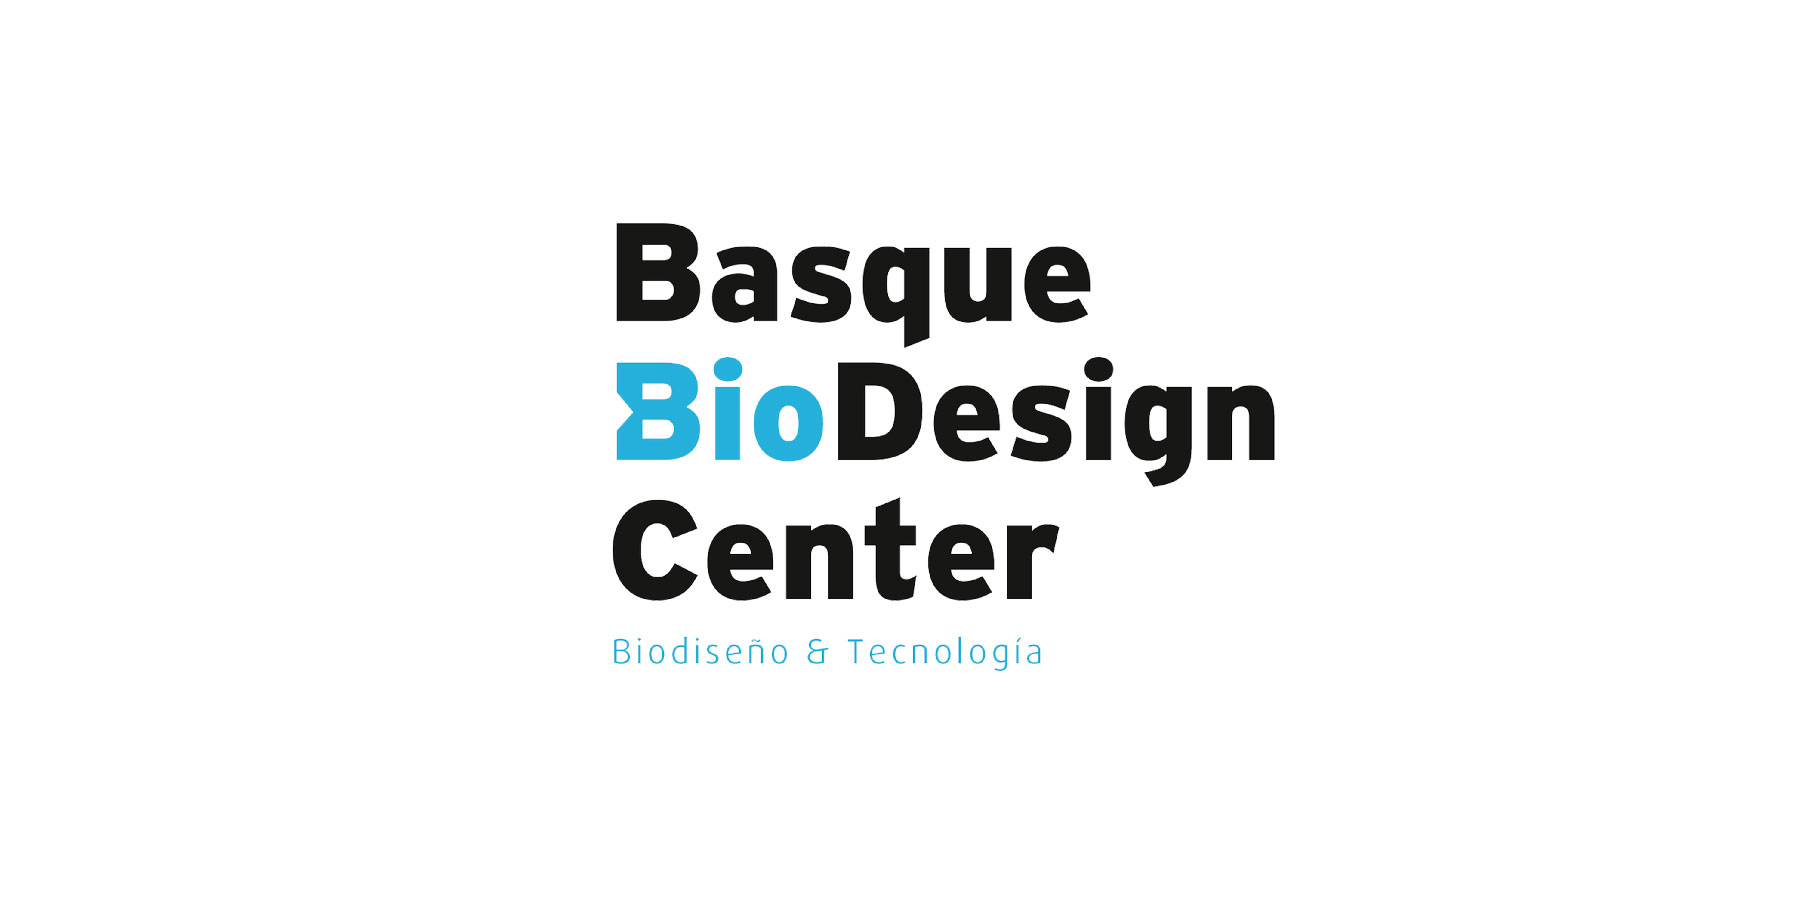 basque bio design center.jpg